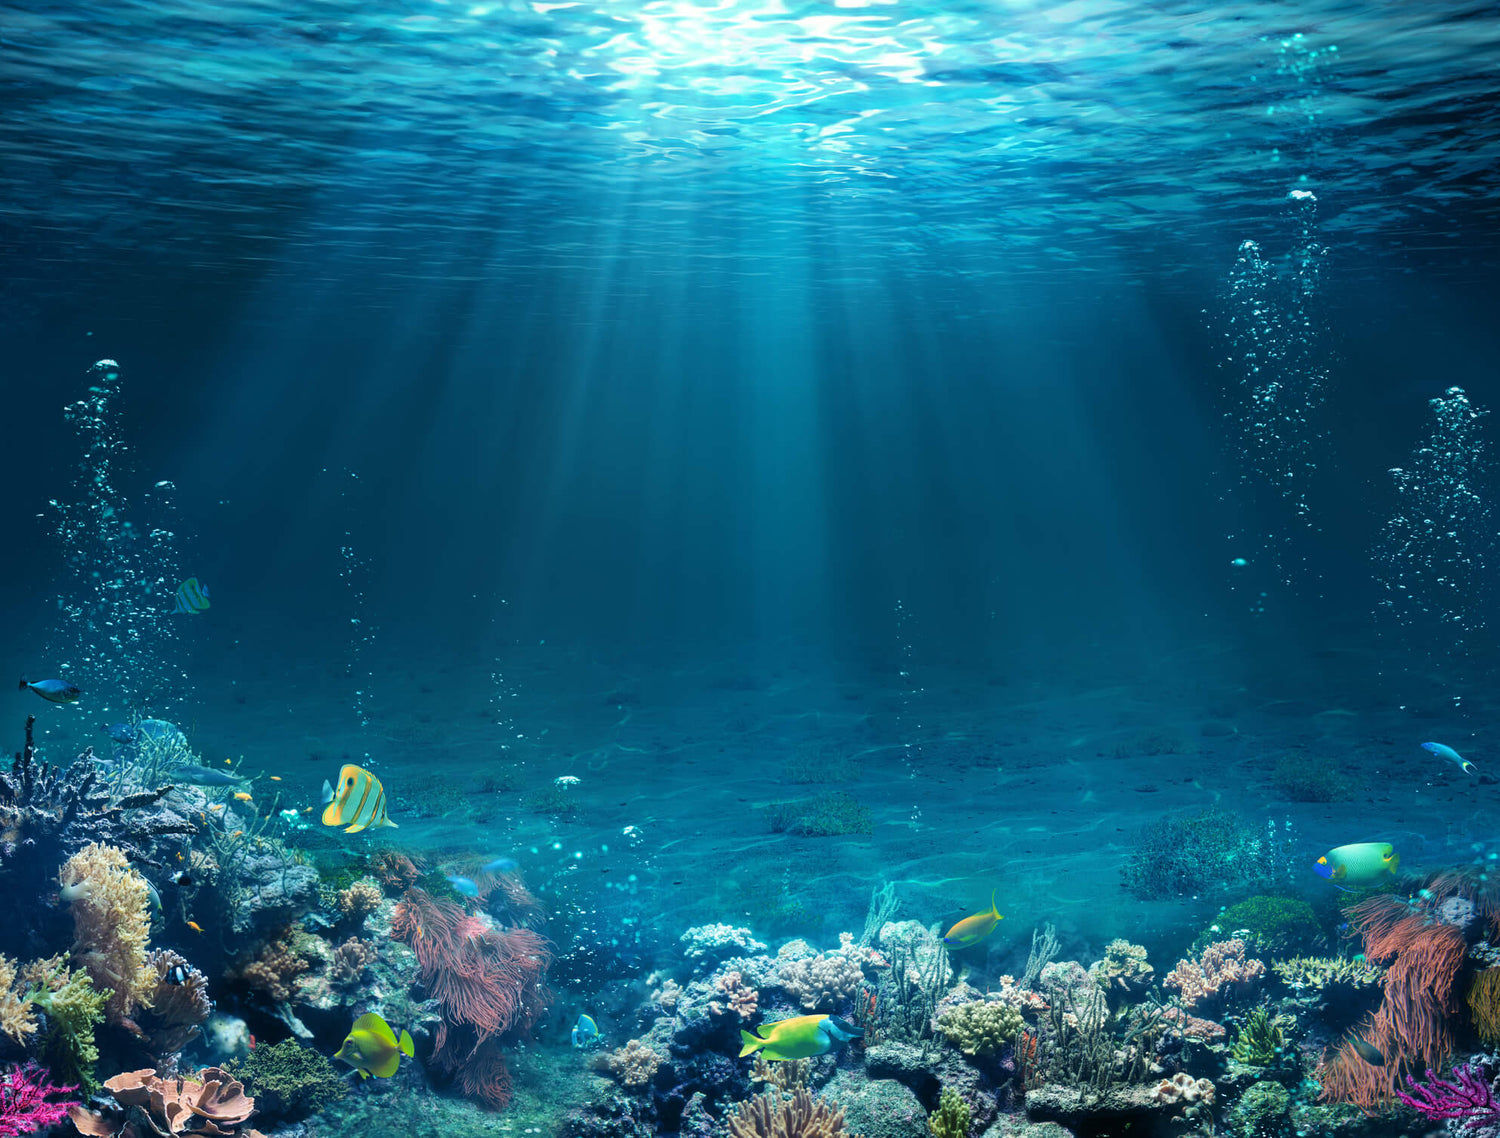 underwater scene with colourful sea life